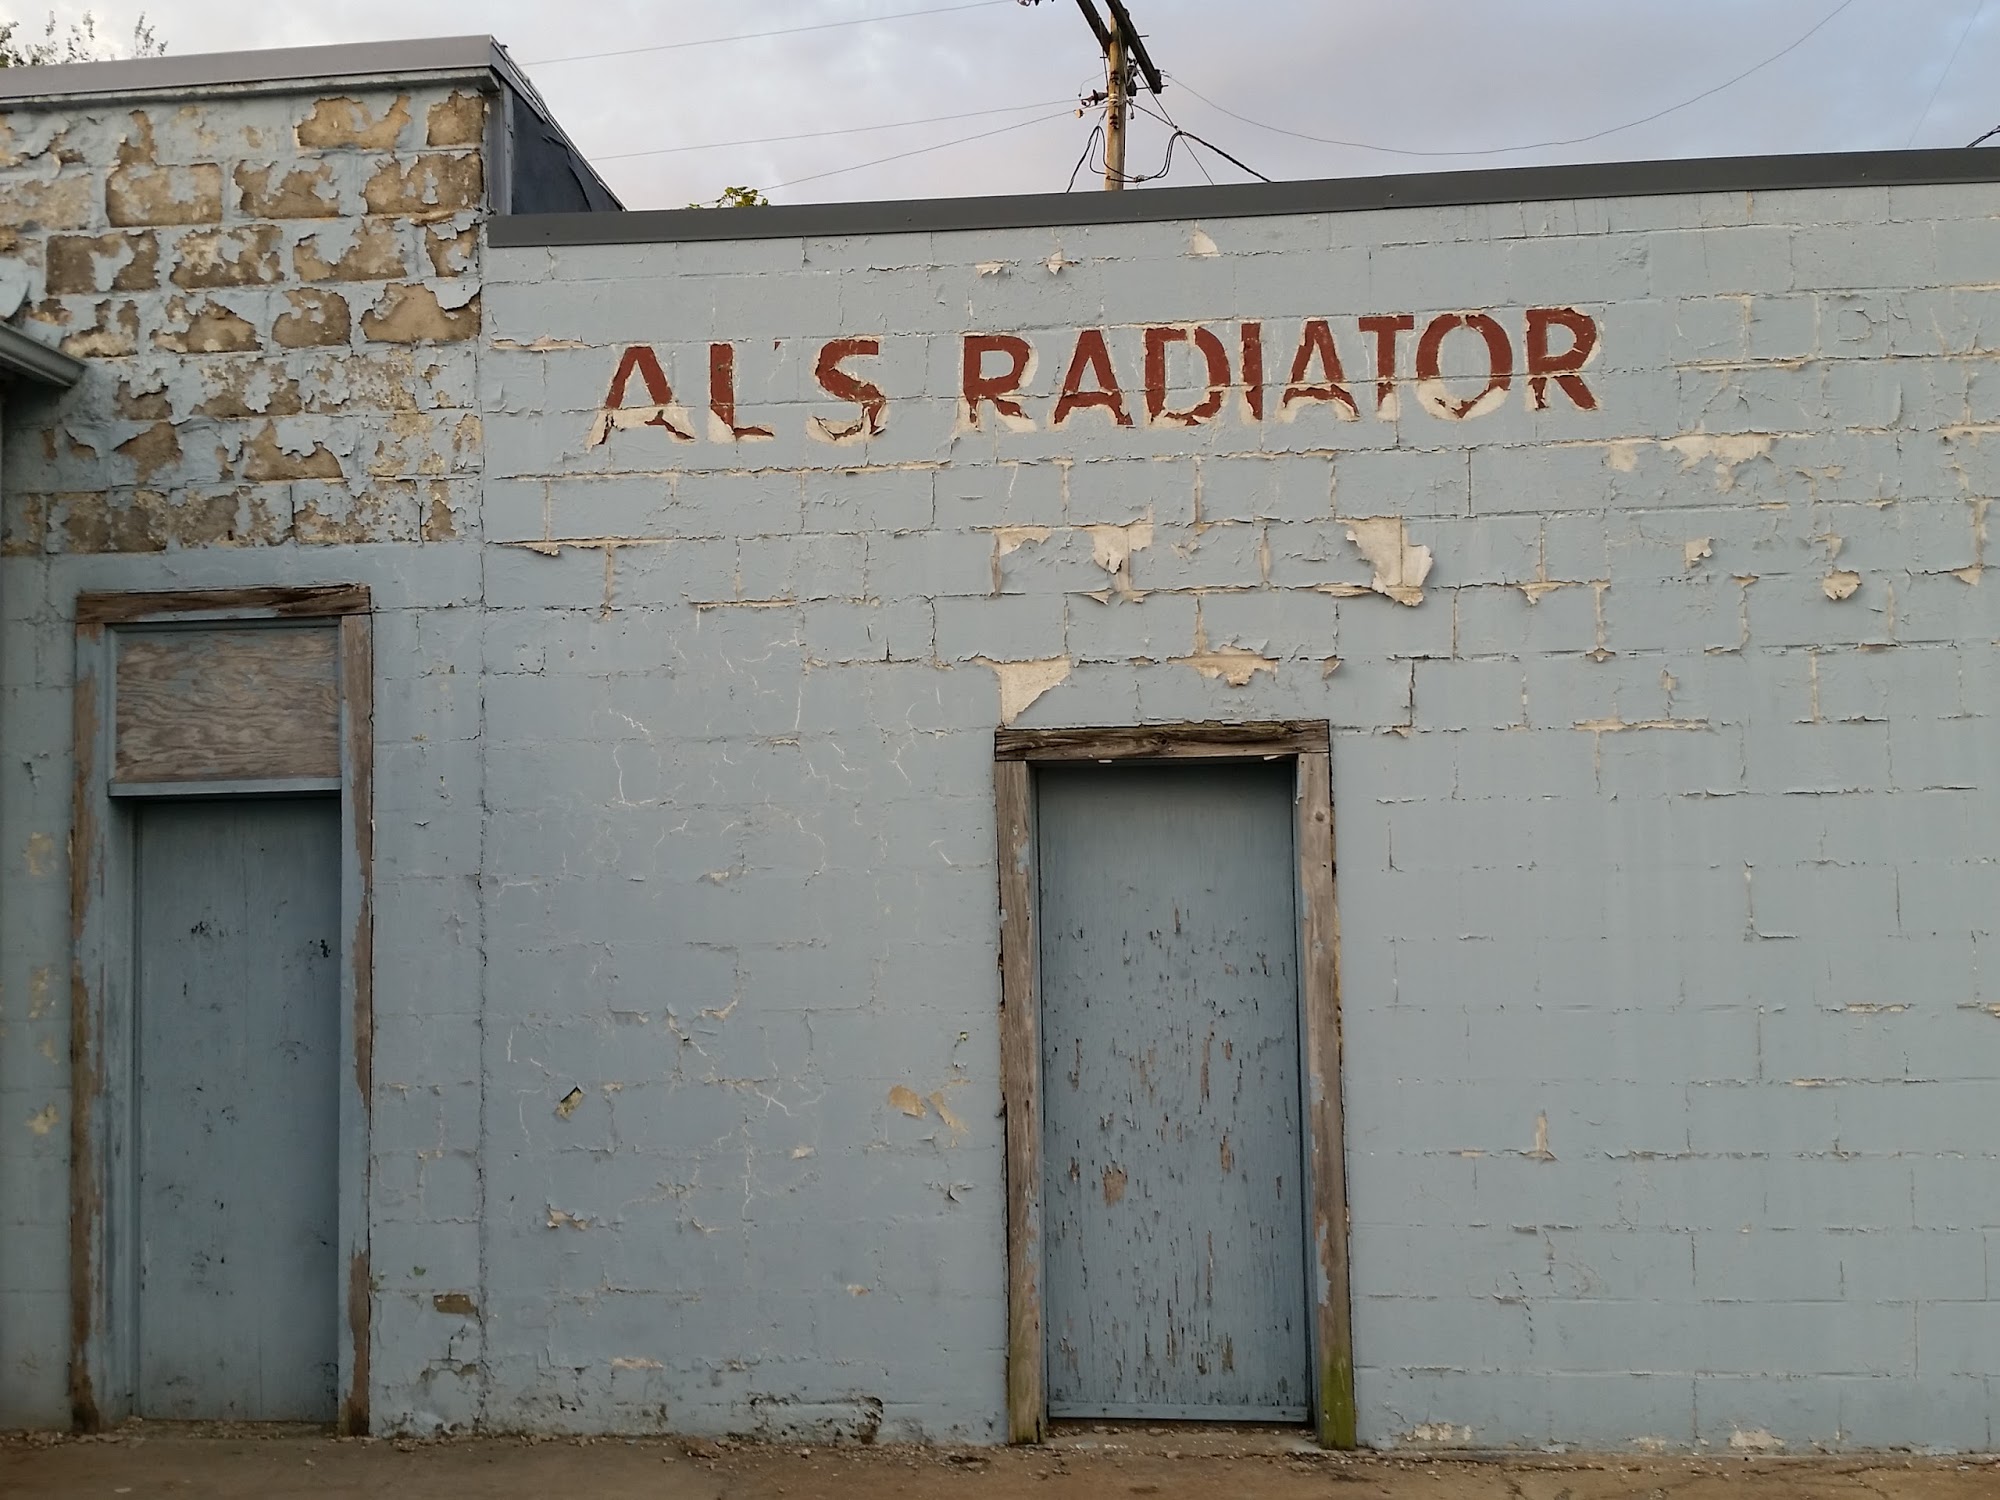 Al's Radiator Services